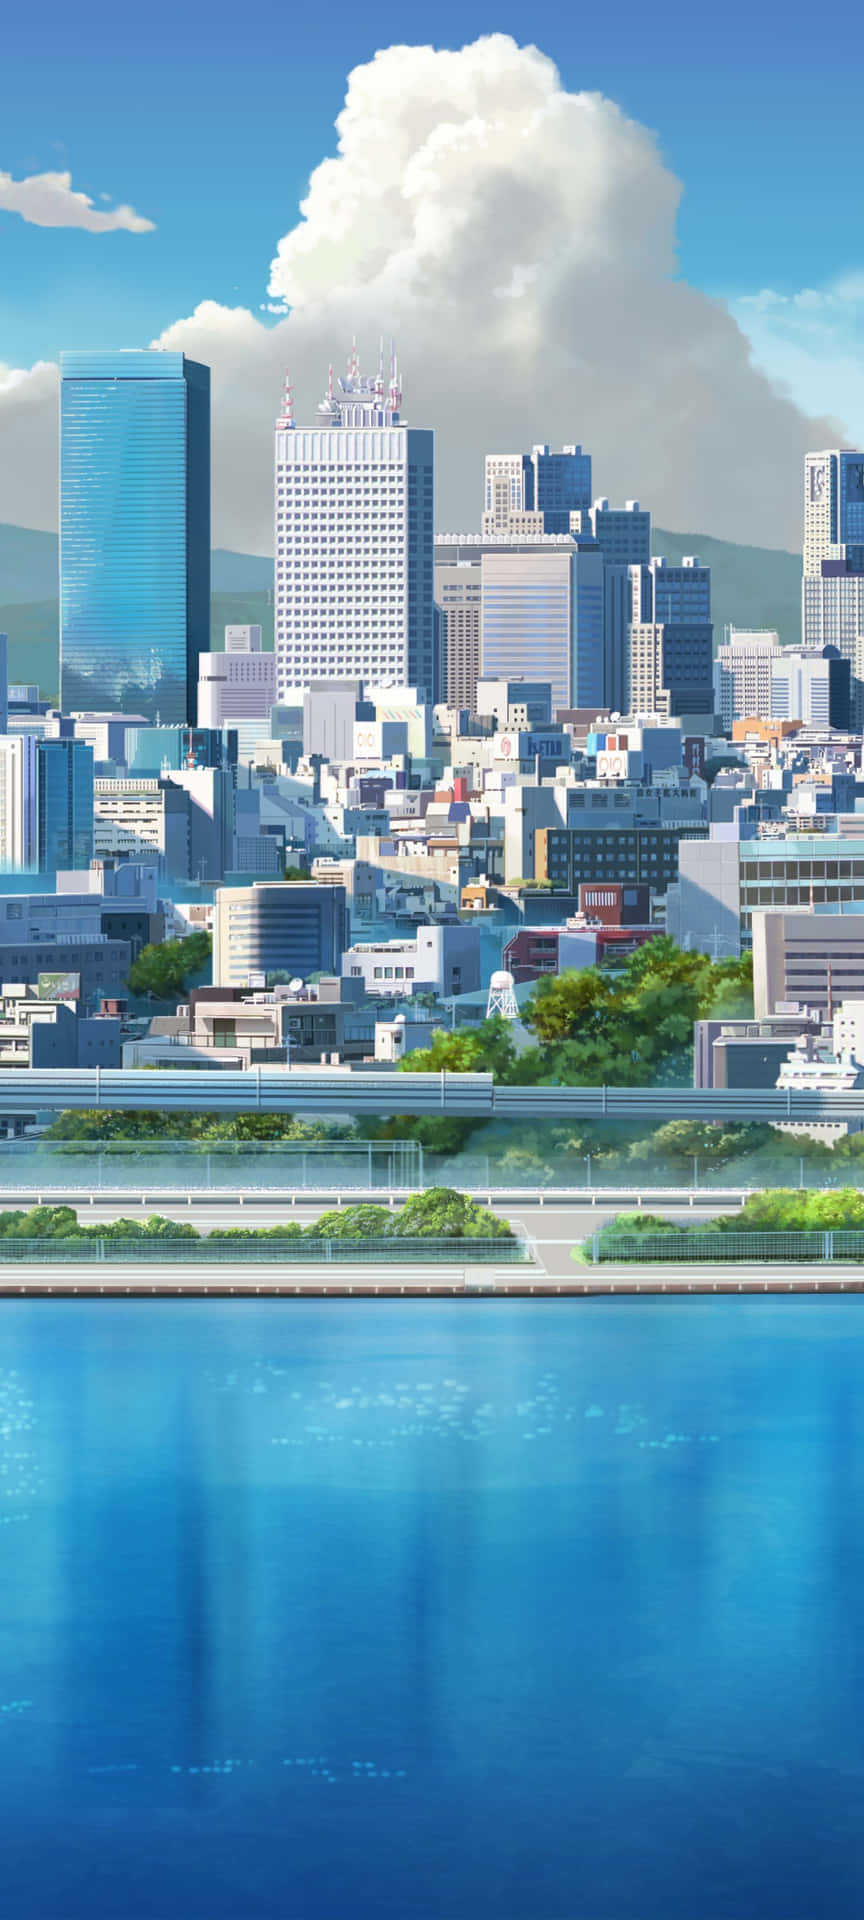 Anime High-tech City Buildings Wallpaper